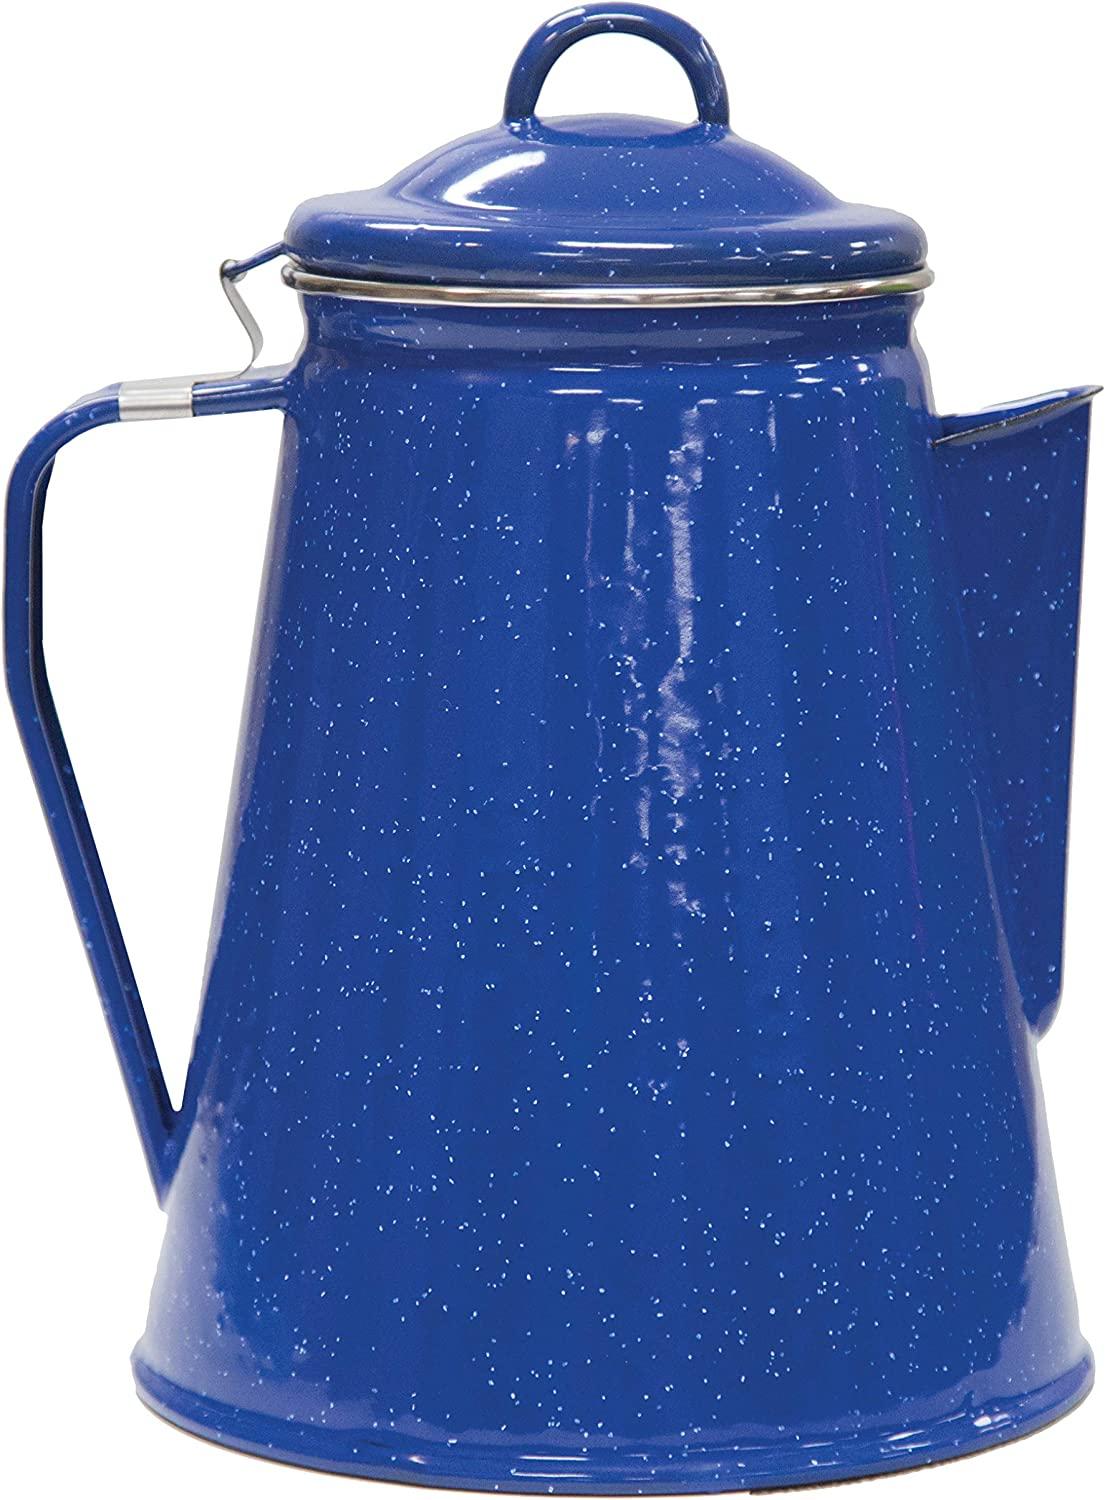 Enamel Percolator Coffee Pot & 4 Mug Set - Blue - Stansport